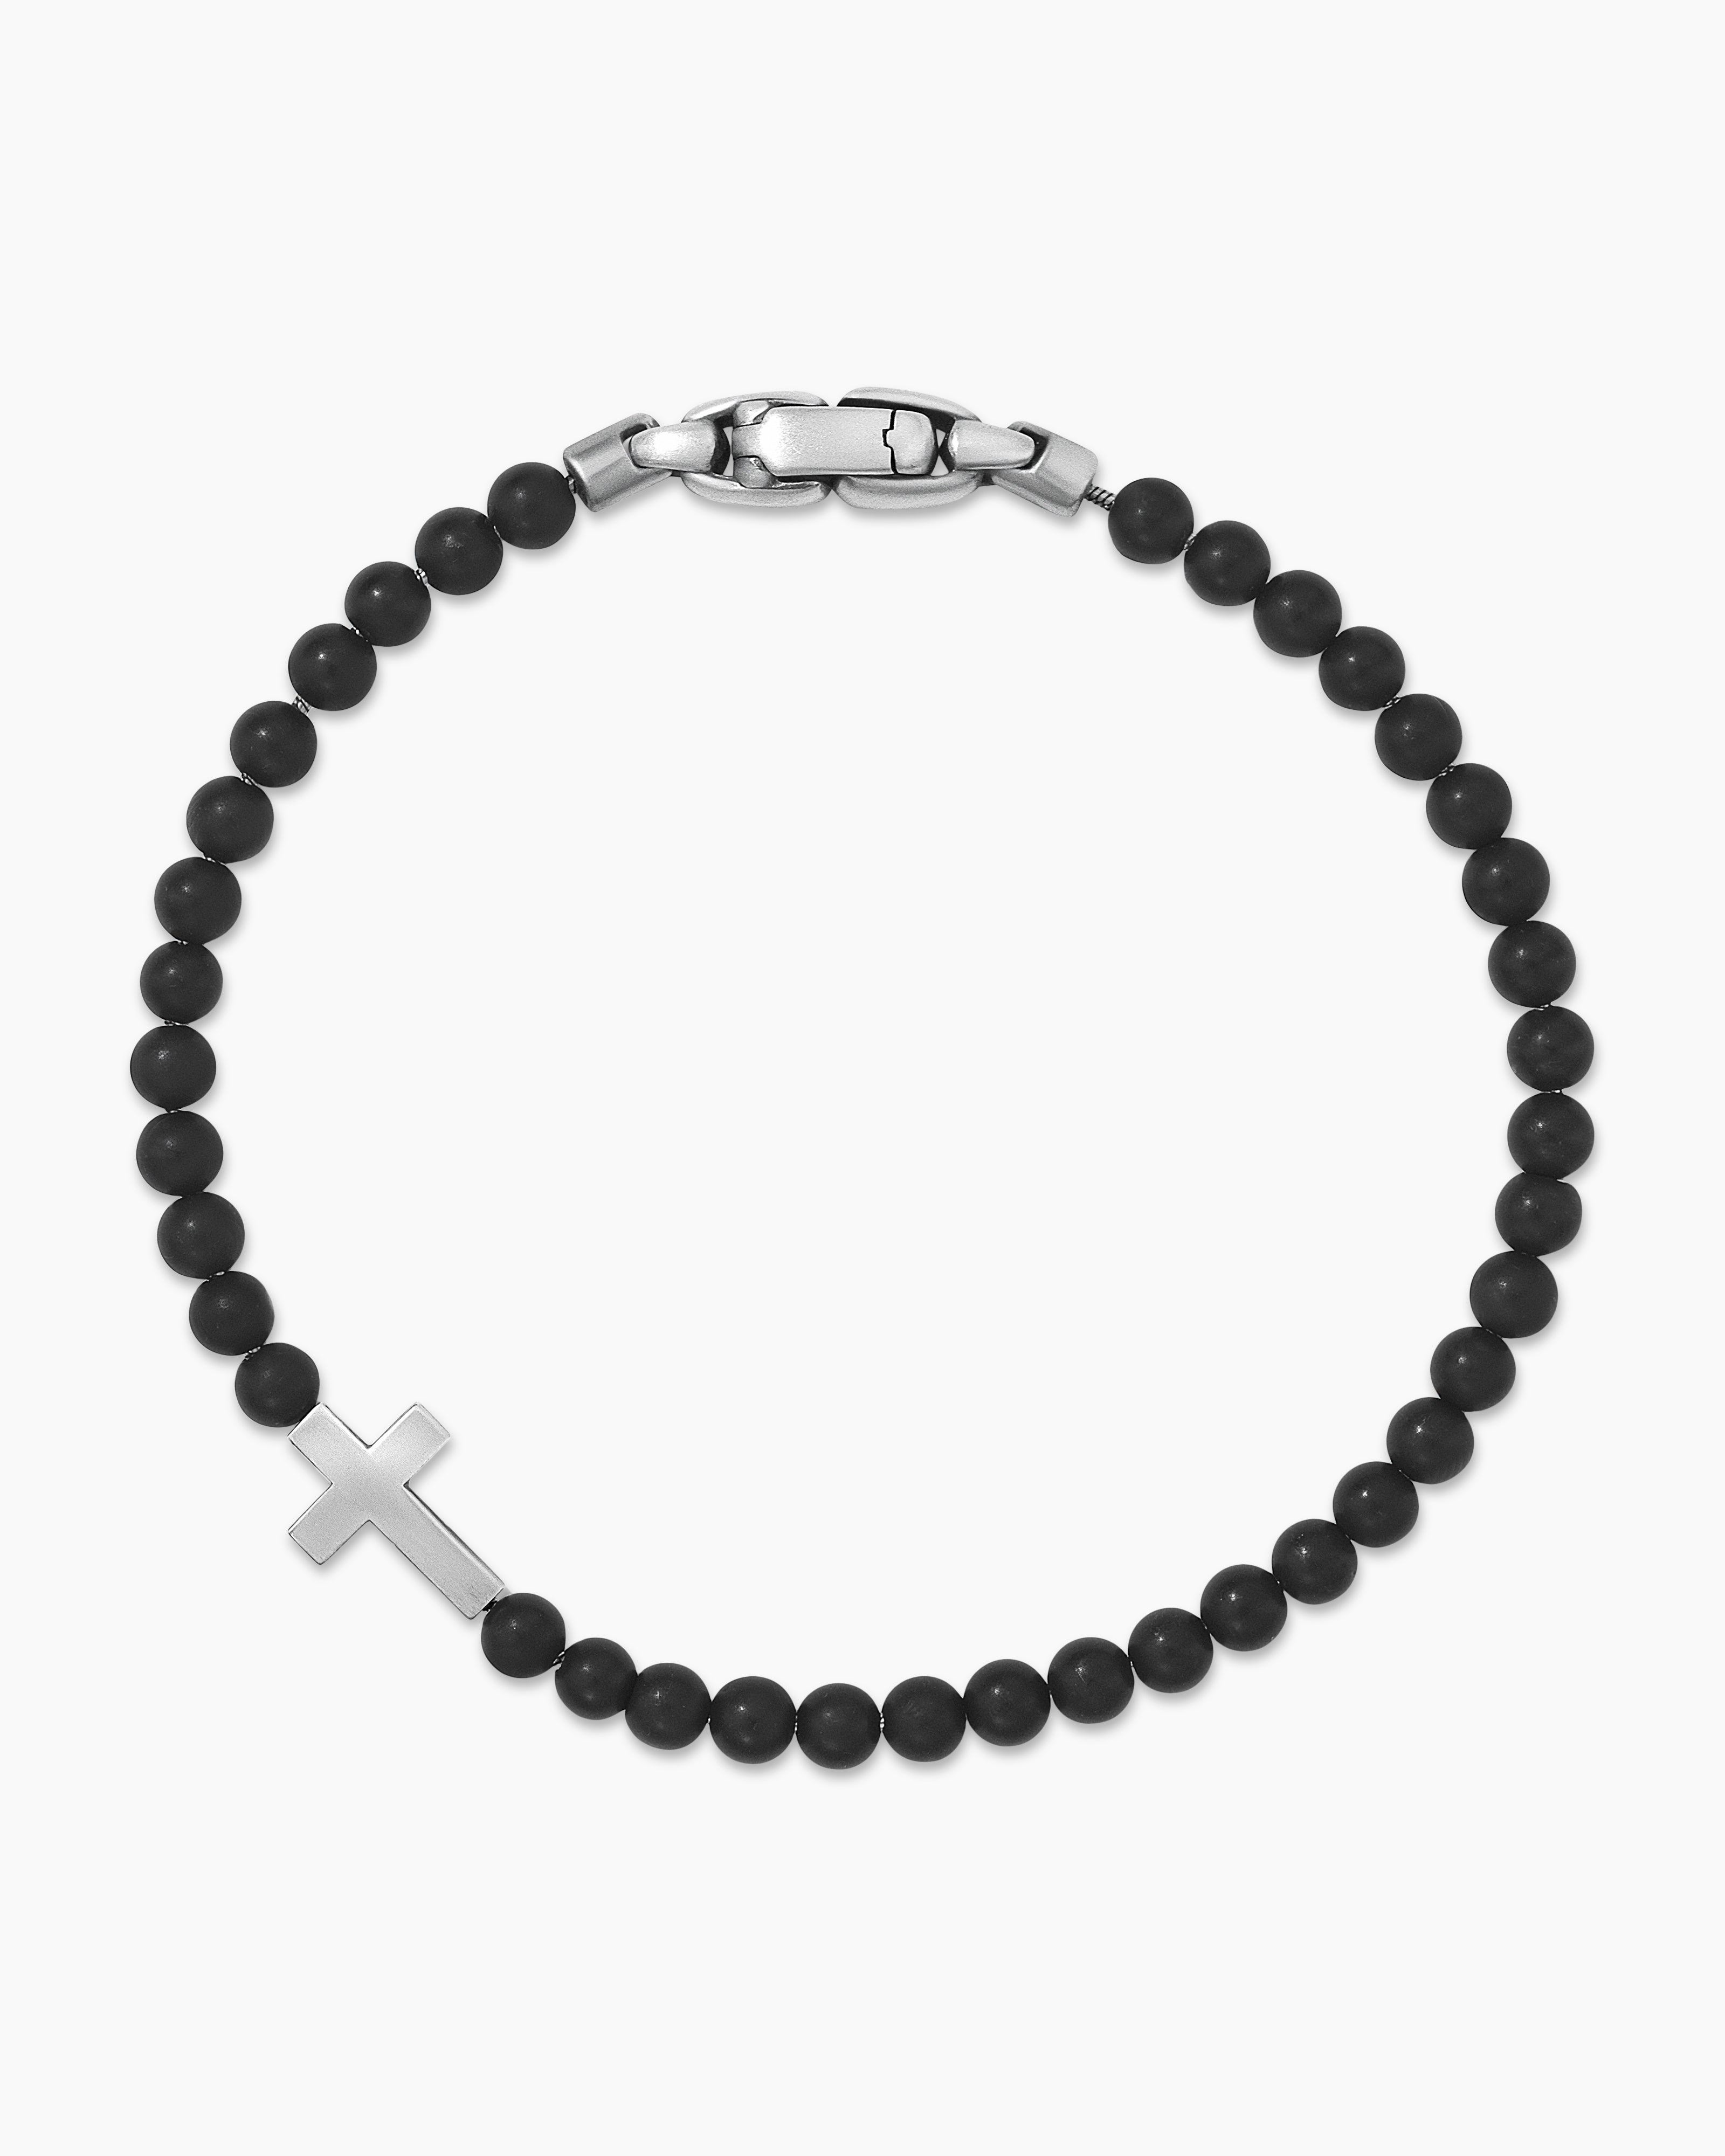 David Yurman Spiritual Beads Cross Station Bracelet with Black Onyx